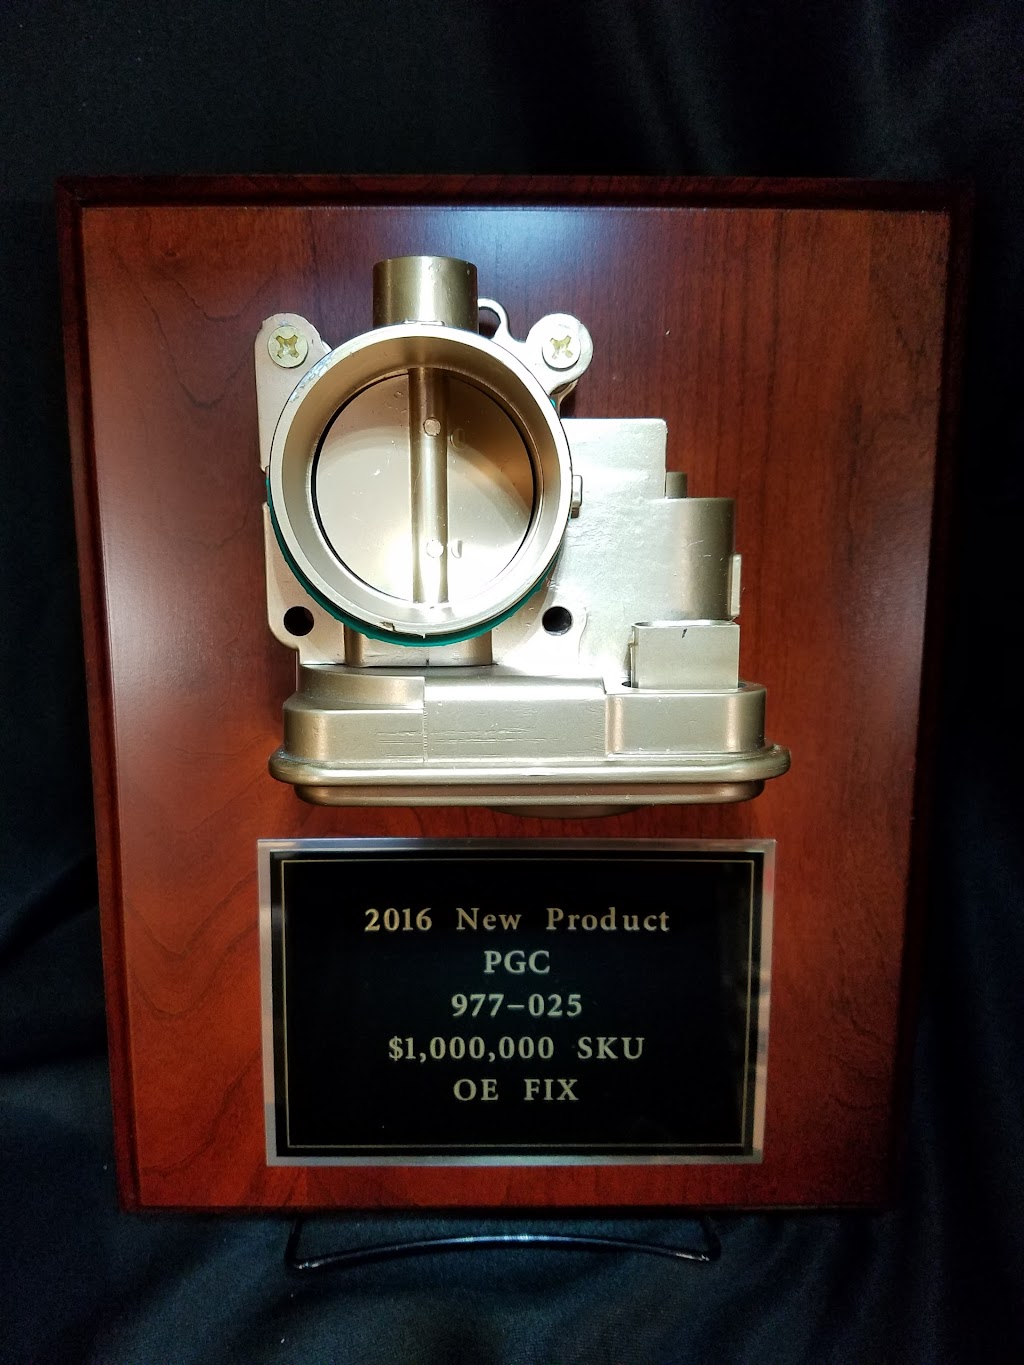 Bux-Mont Awards & Engraving | 225 N Main St, Sellersville, PA 18960 | Phone: (215) 257-5432